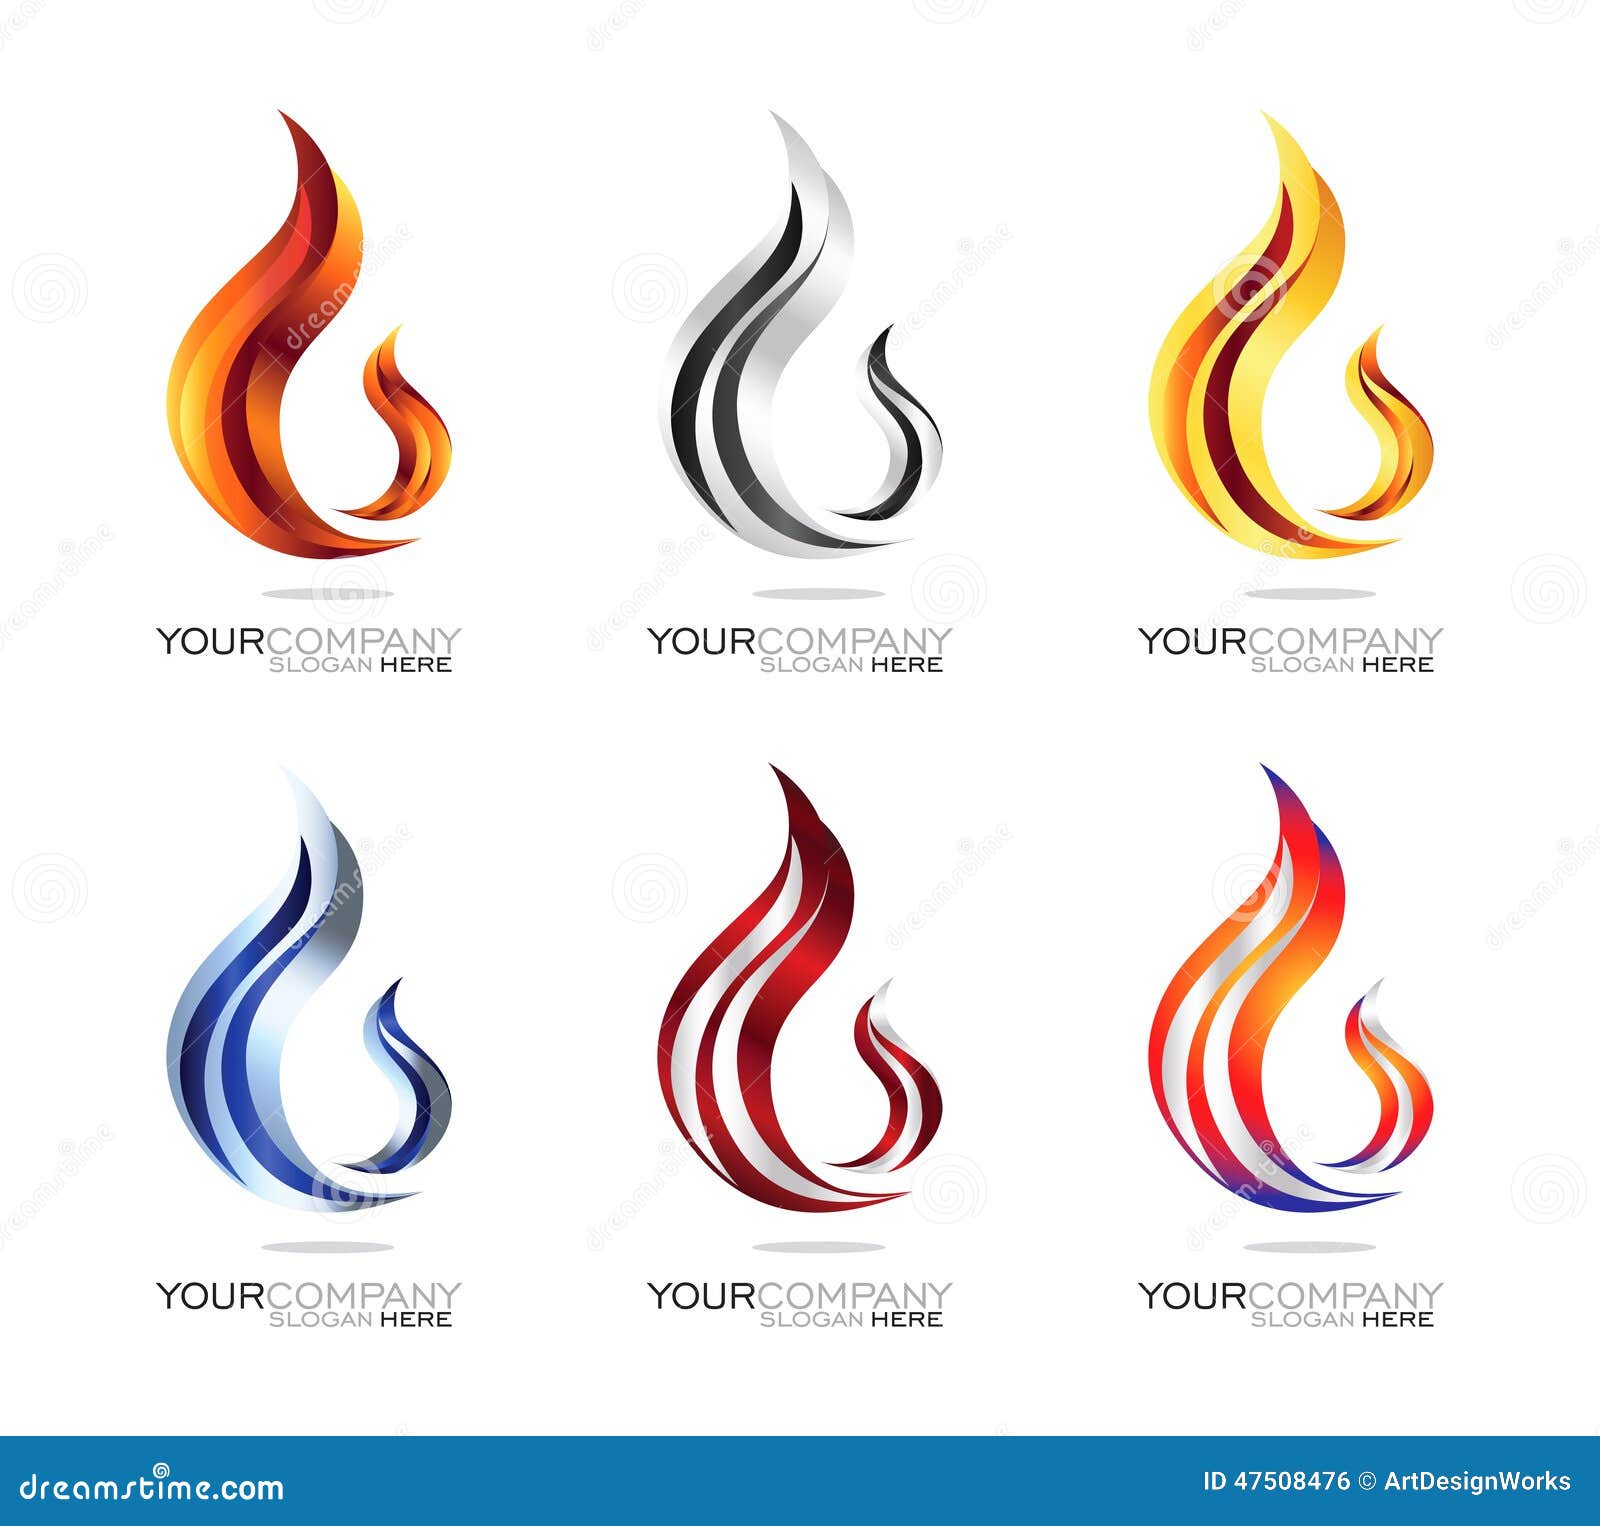 Fire flame logo design stock vector. Illustration of identity - 47508476